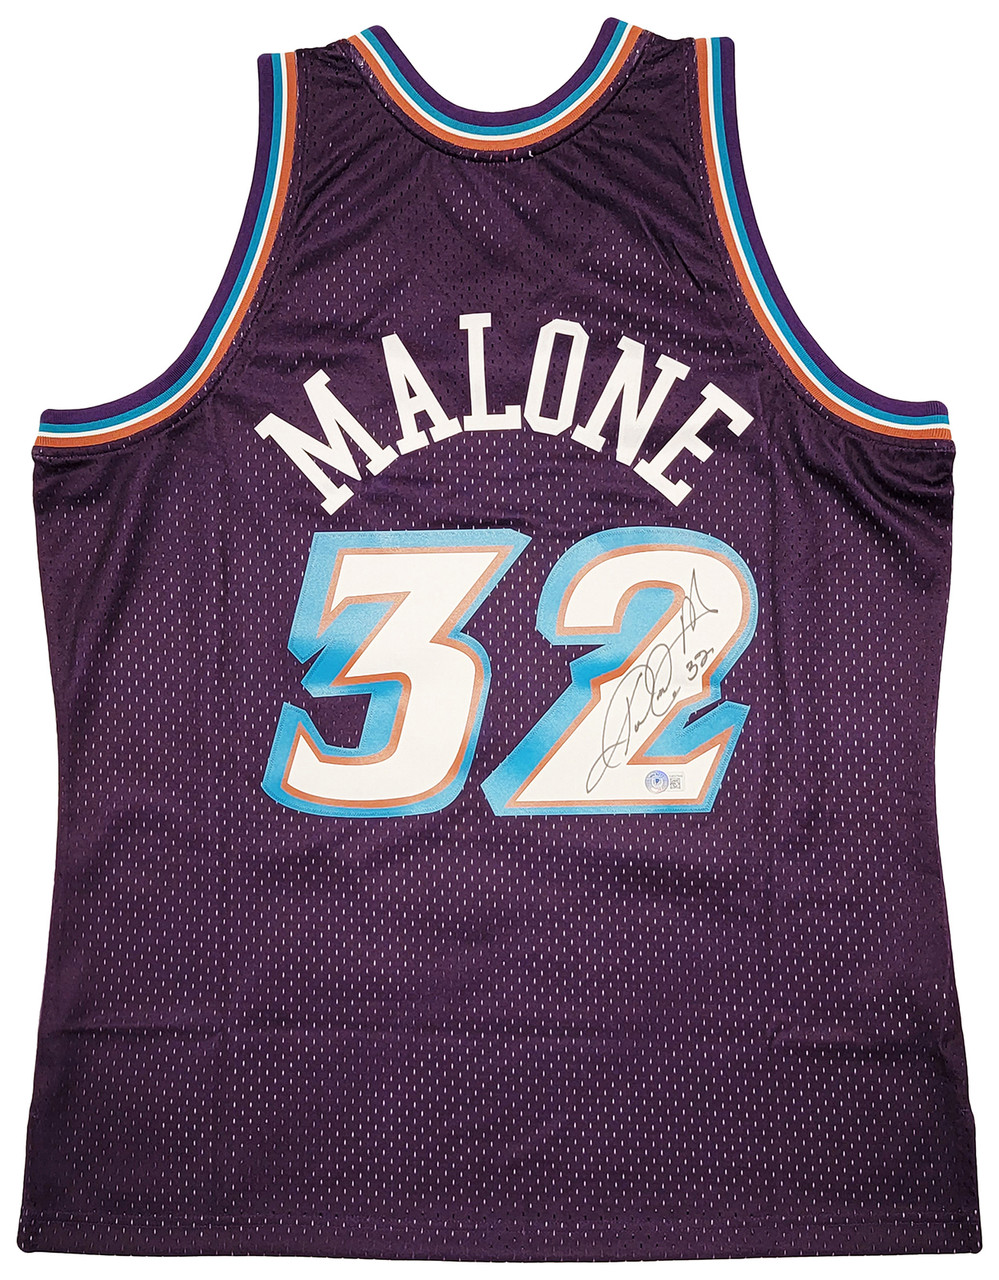 Utah Jazz Karl Malone Autographed Purple & Teal Authentic Mitchell